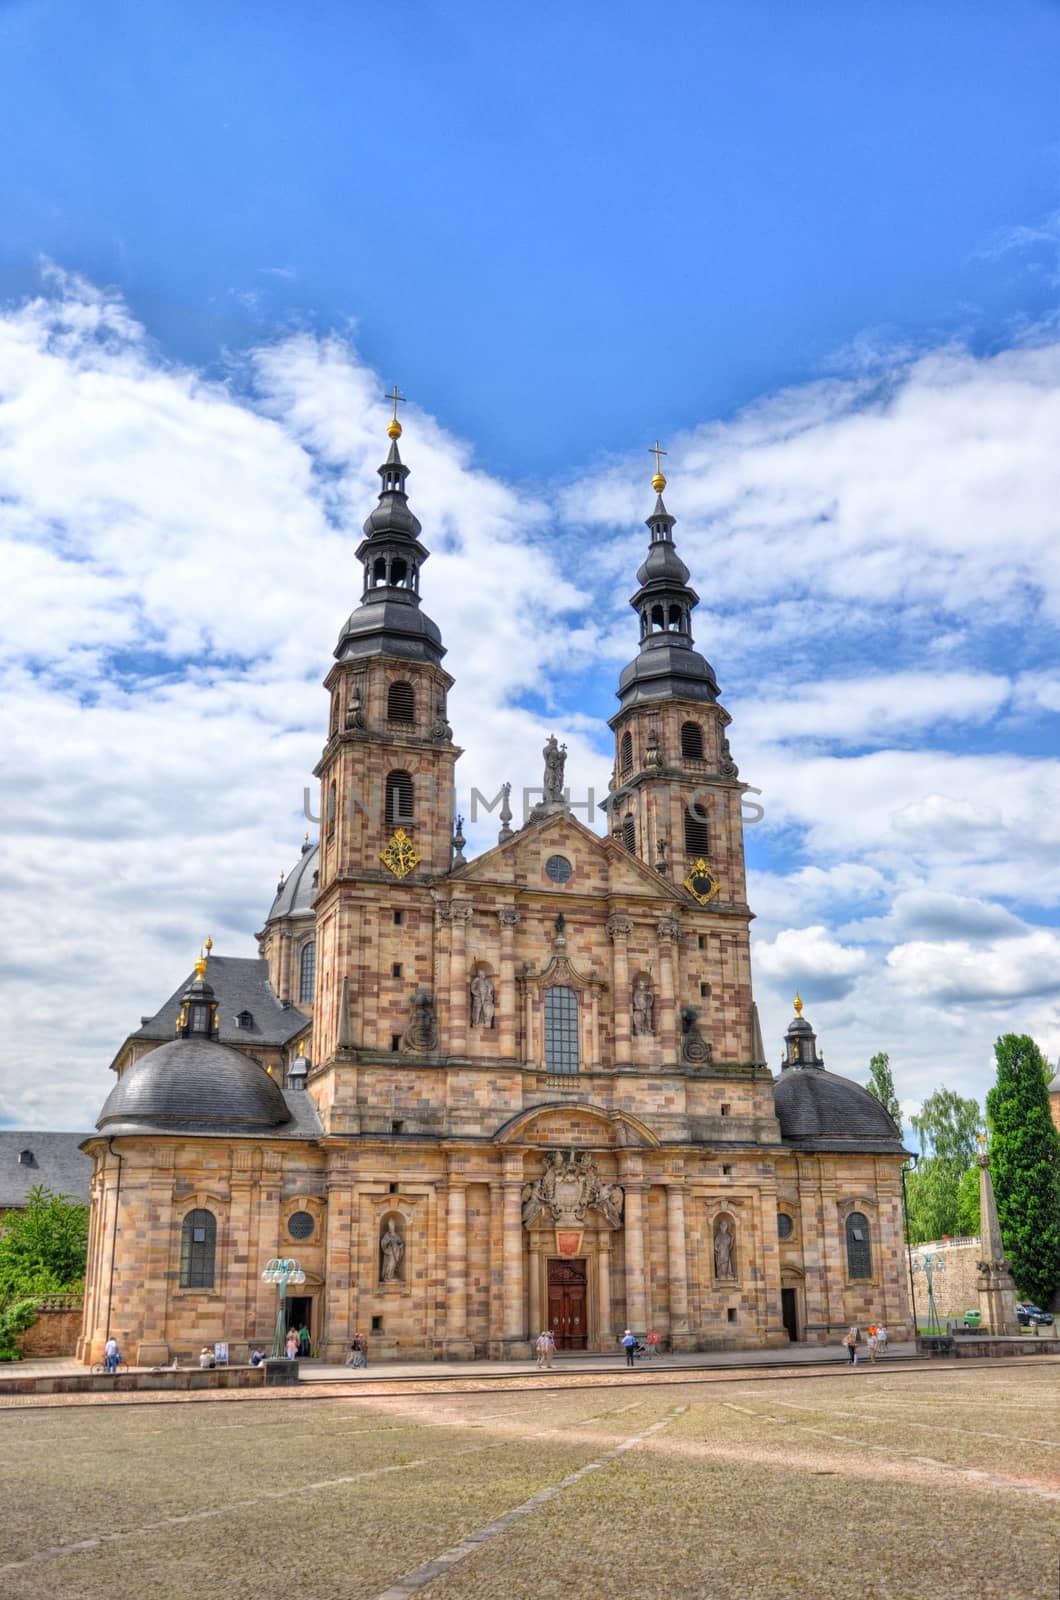 Fuldaer Dom Cathedral in Fulda in Hessen, Germany